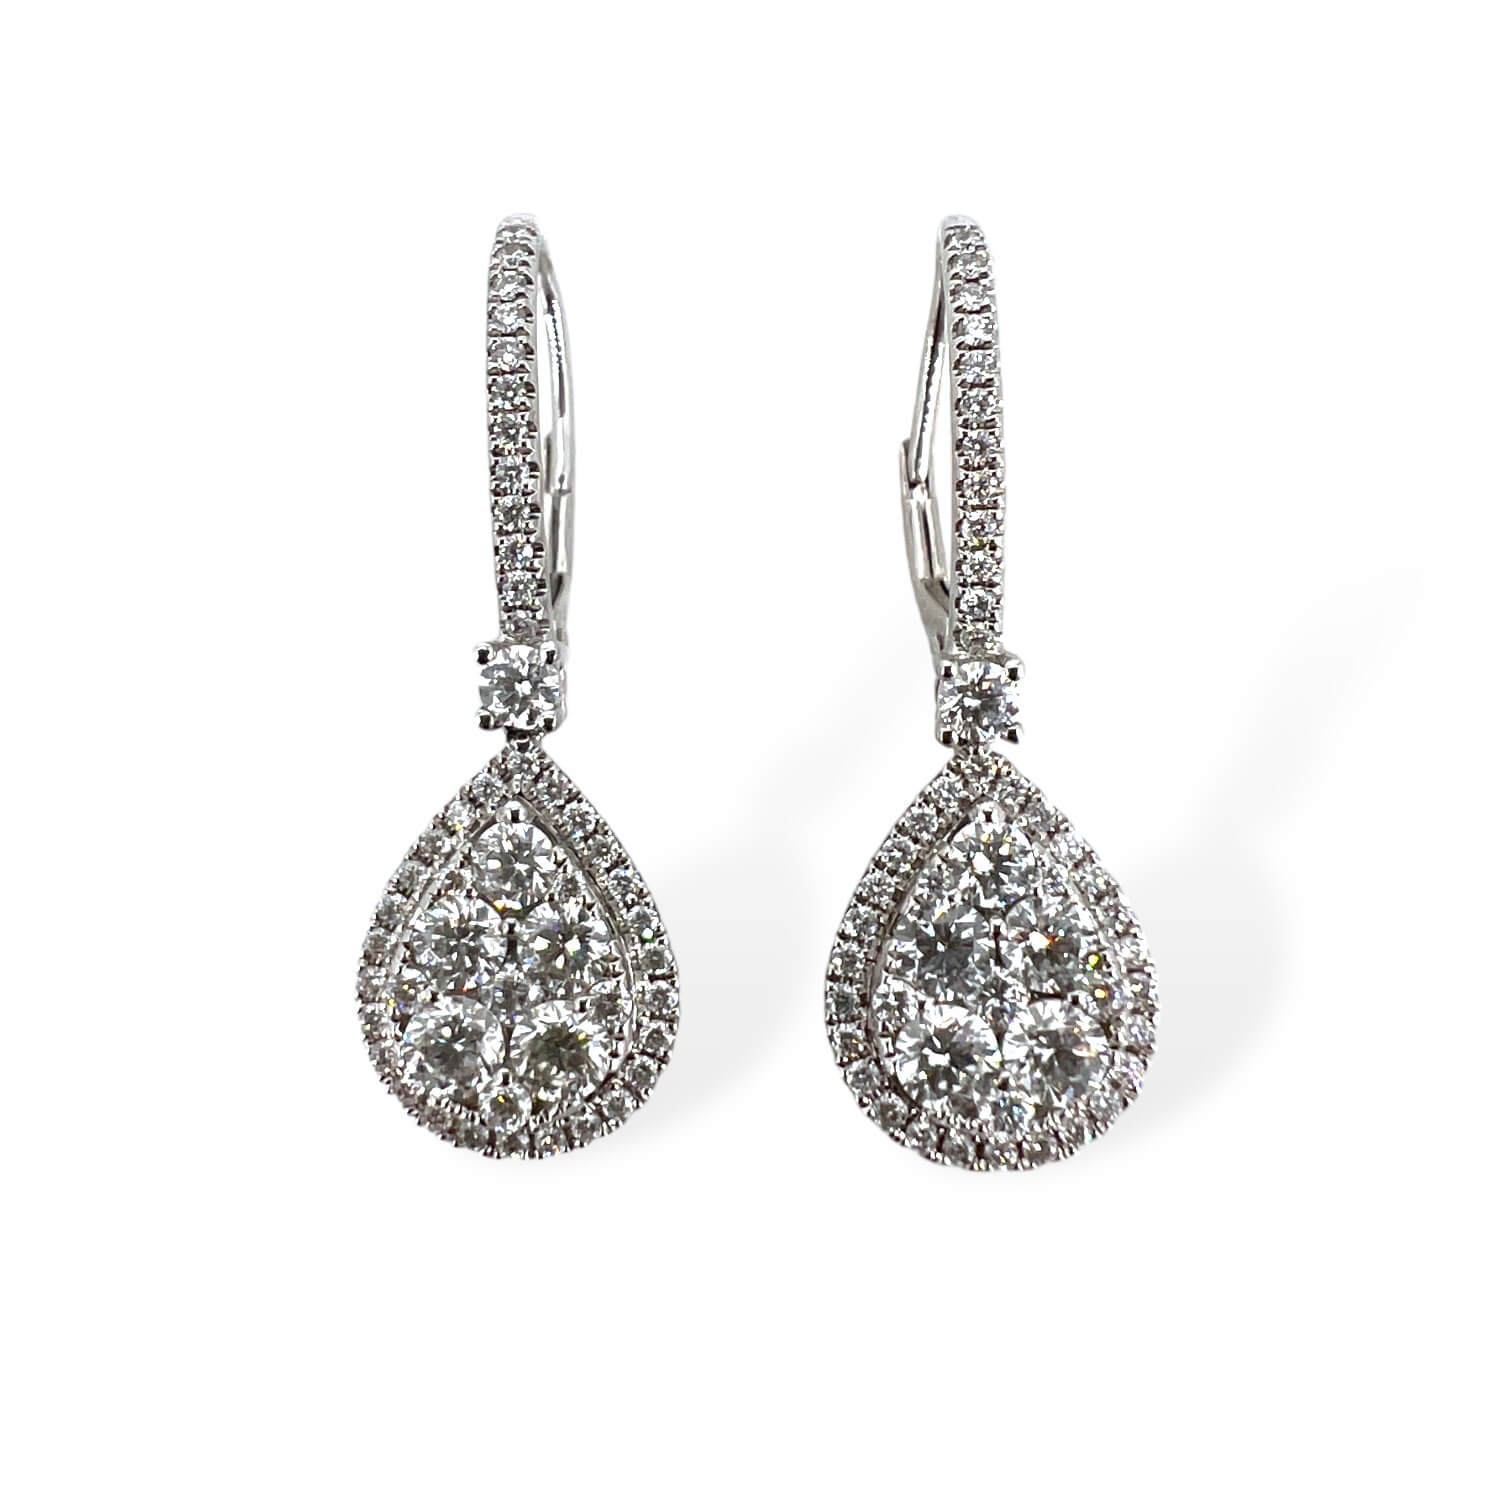 White gold and diamond earrings Art.100550EW